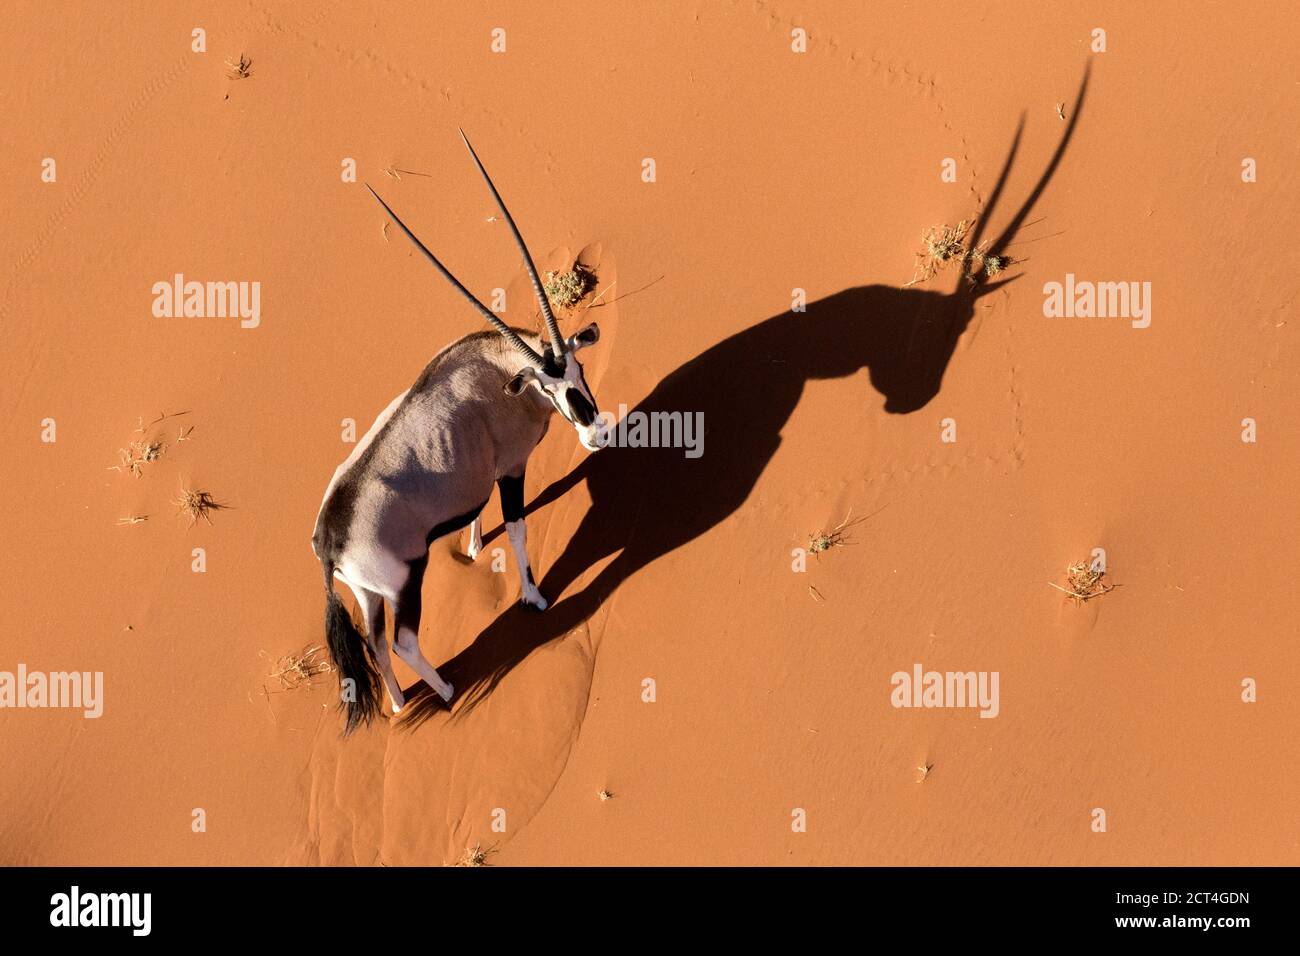 An Oryx or Gemsbok in Sossusvlei, Namibia. Stock Photo